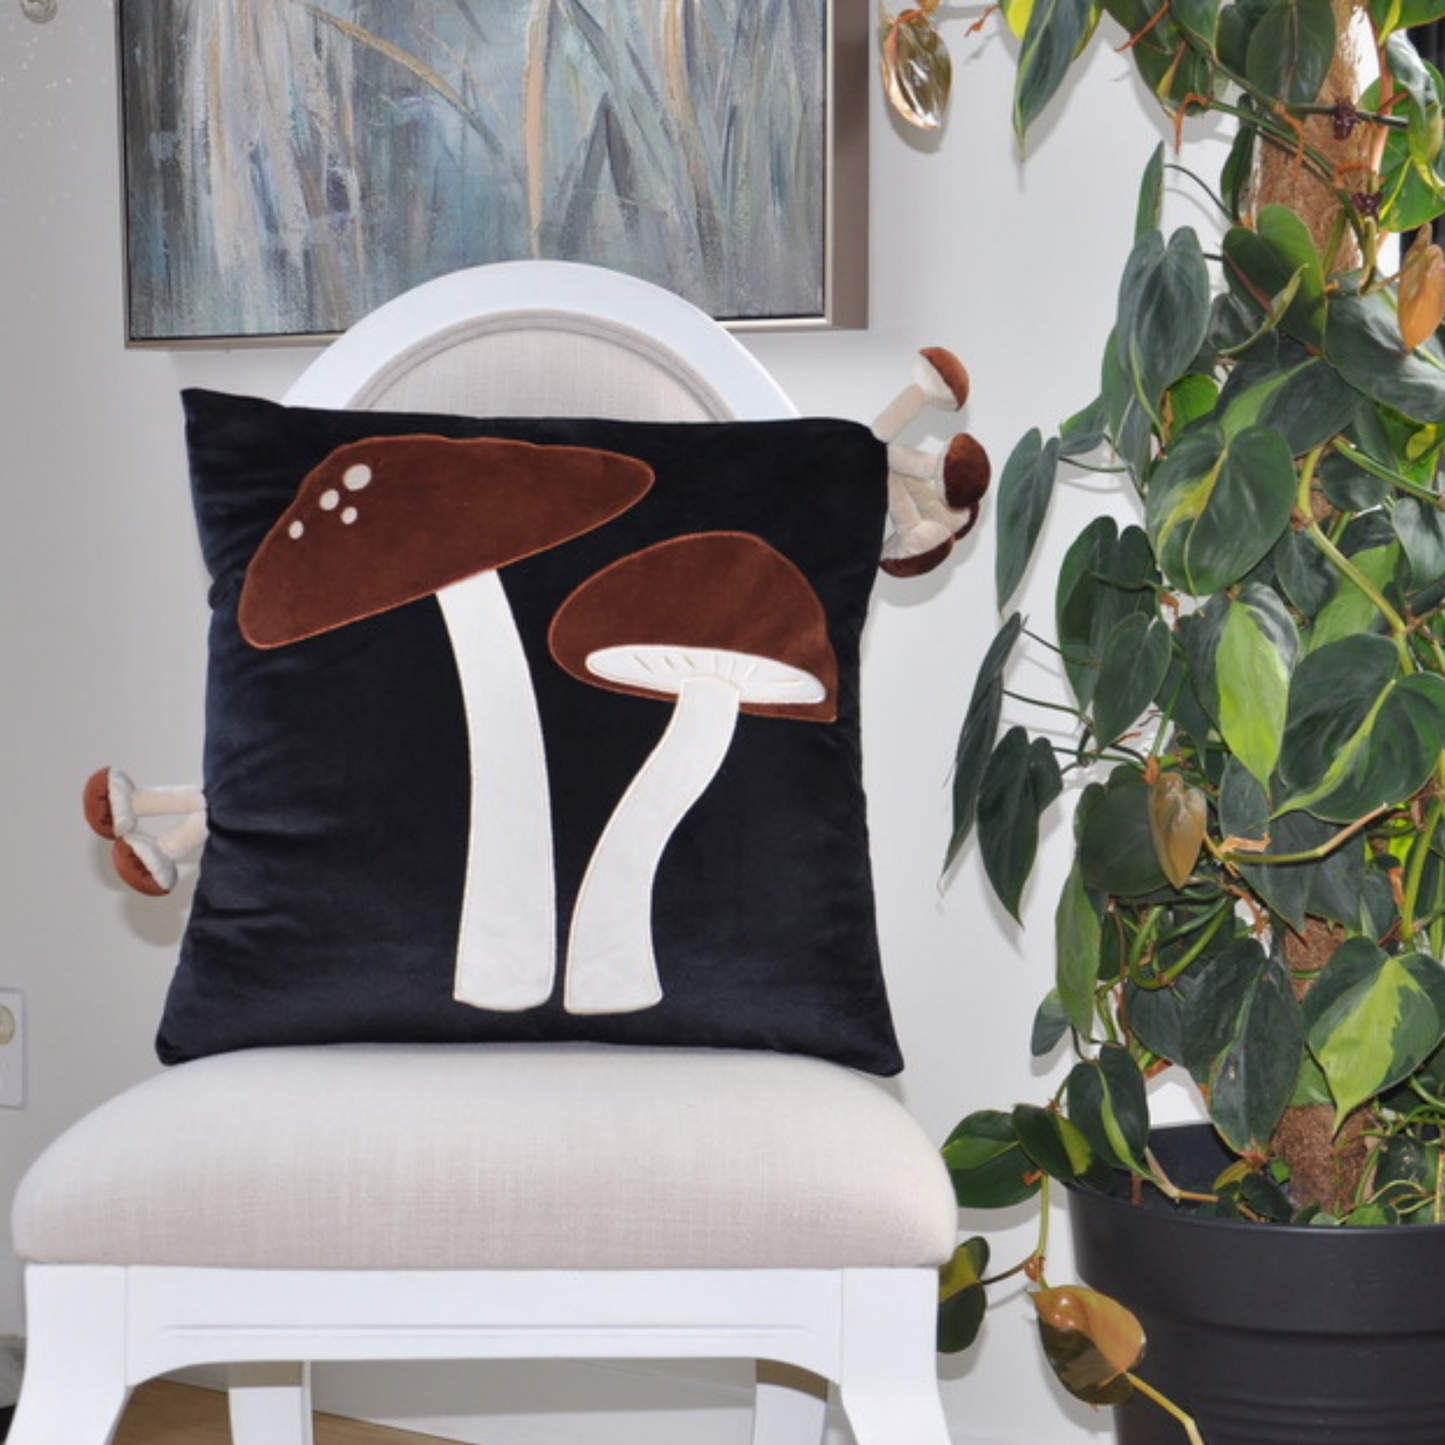 Decorative Mushroom Throw Pillow Cover - Black